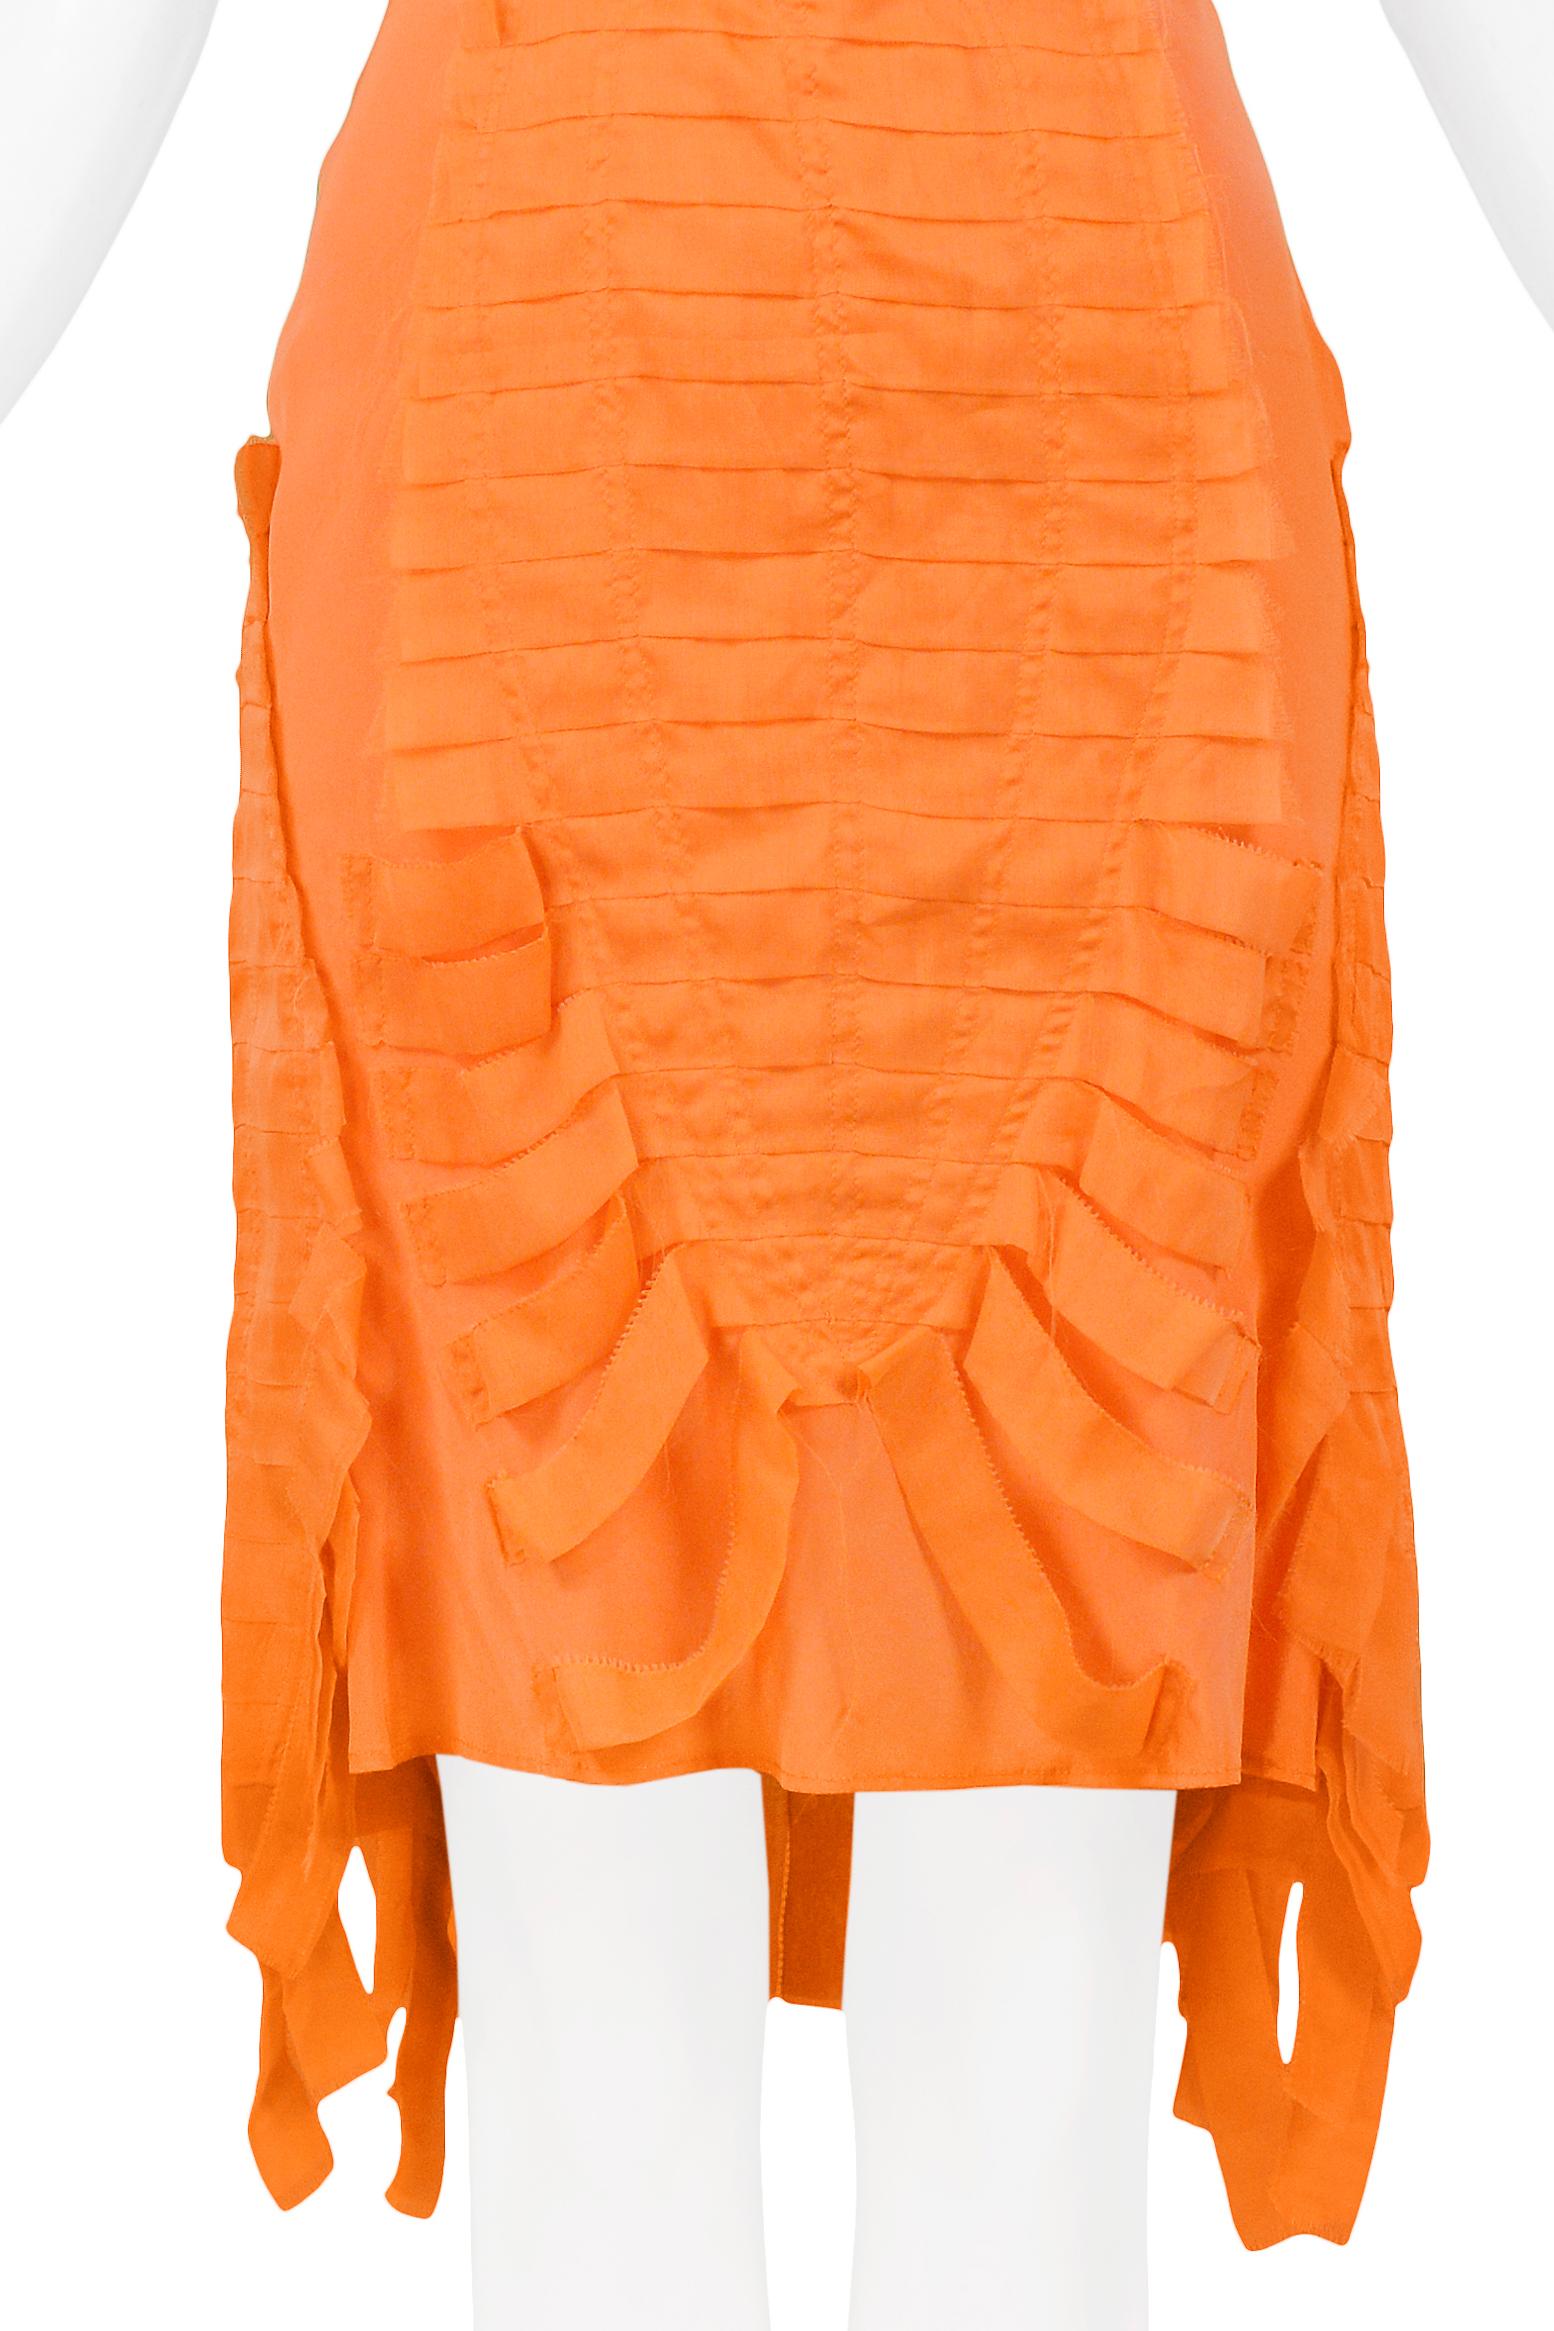 gucci orange dress